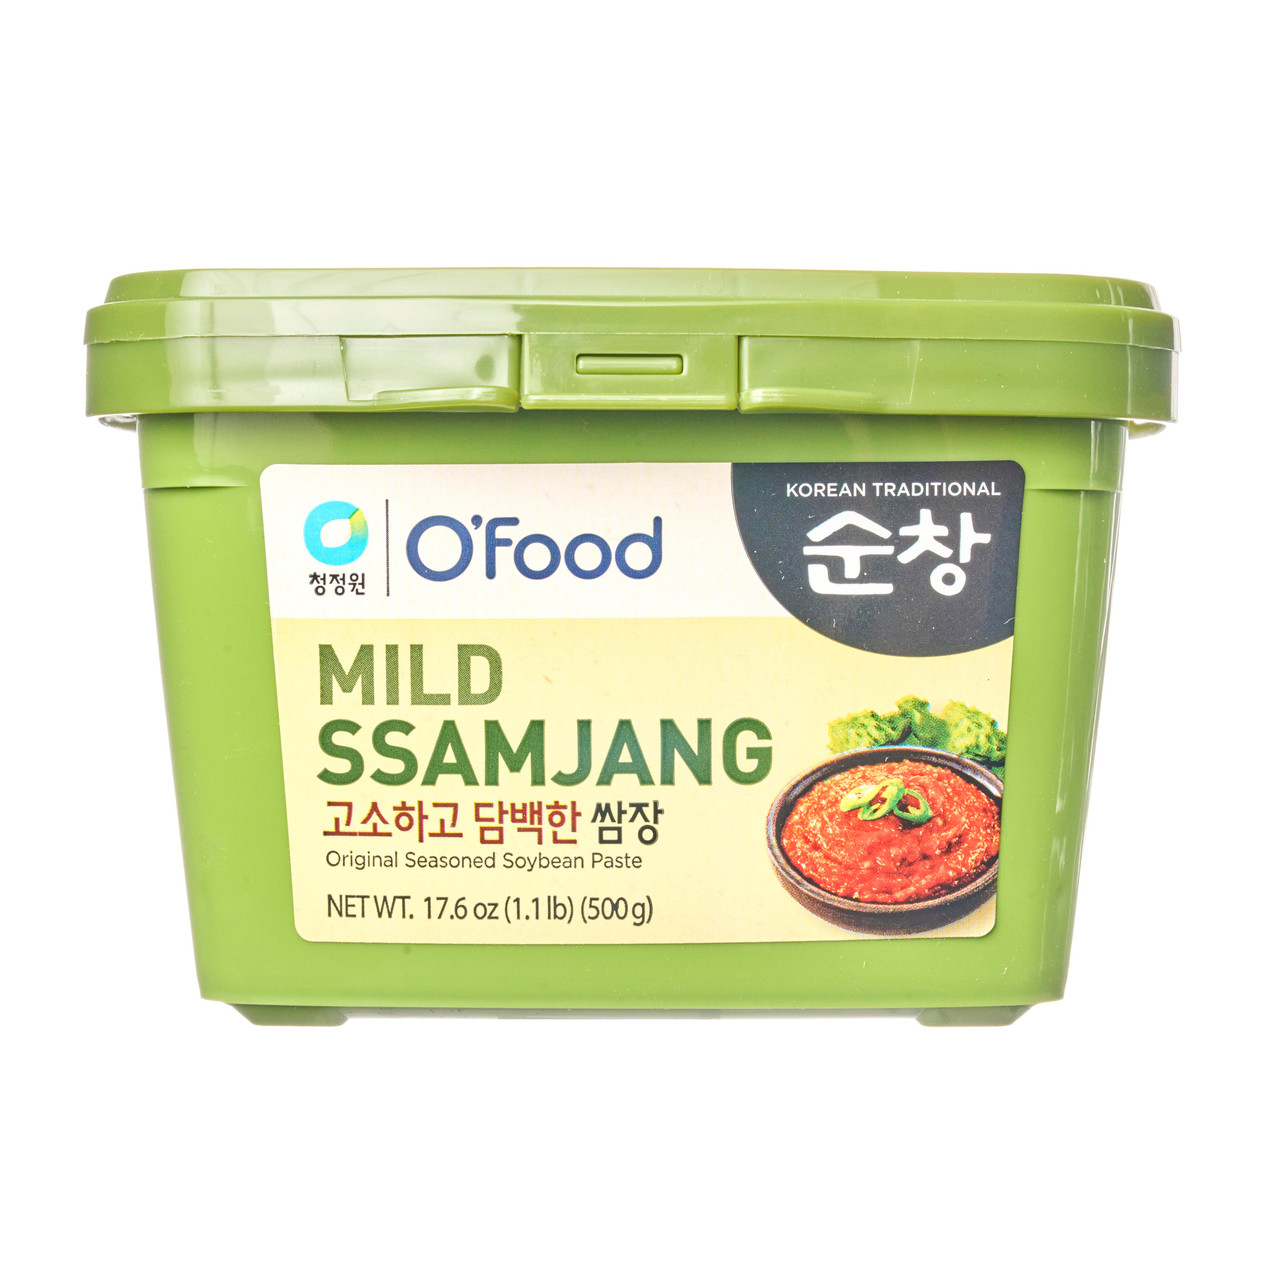 Paste　g　500　Soybean　O'Food　Meats　for　Mild　Seasoned　Ssamjang　ジャパンセンター